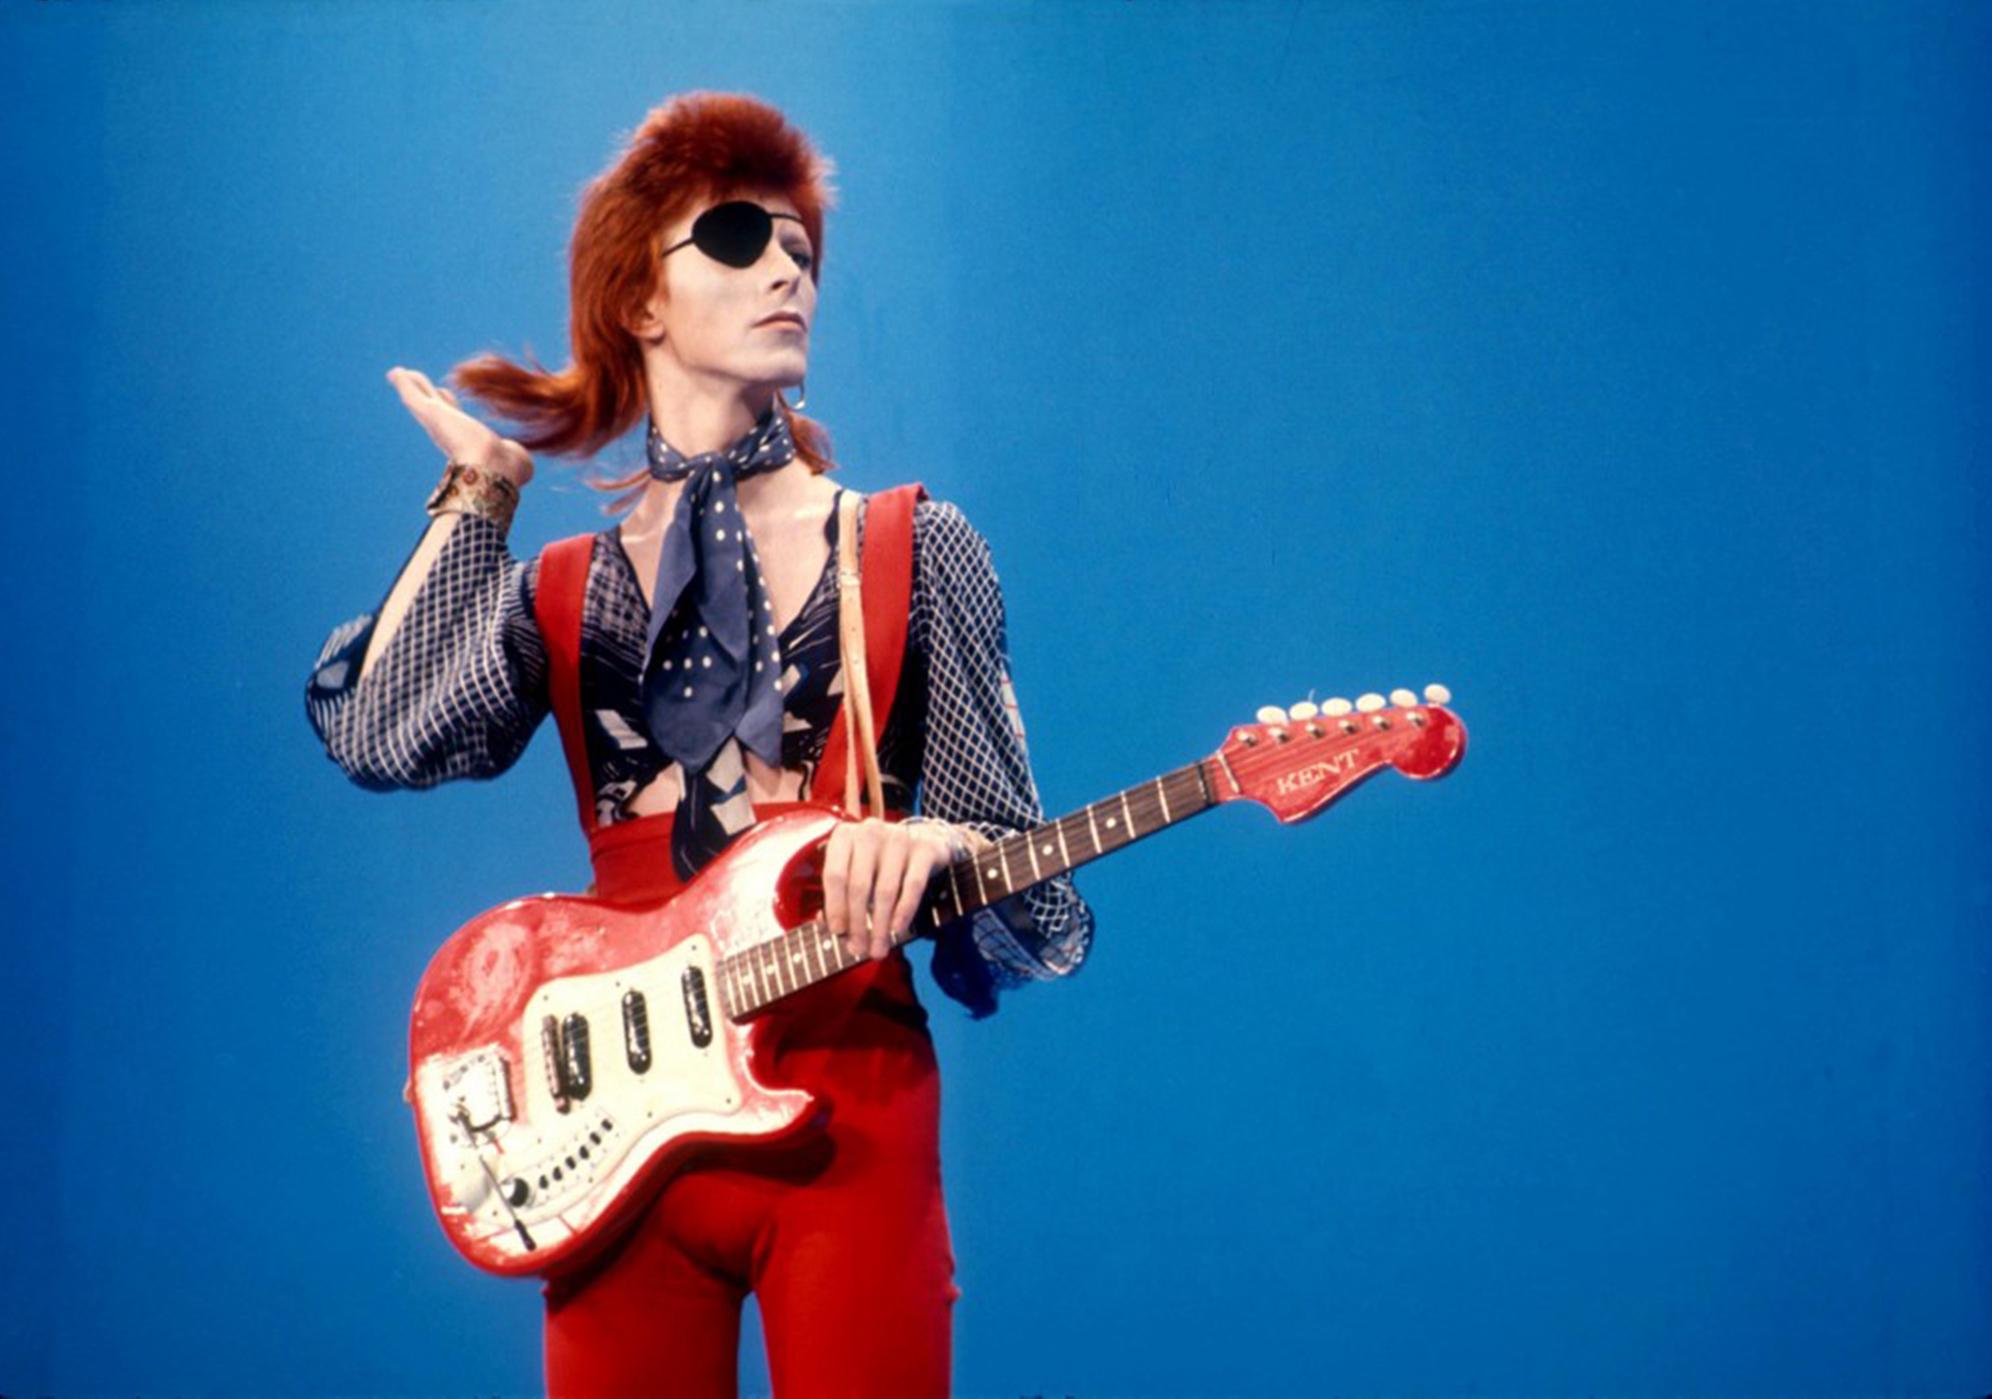 Barry Schultz Color Photograph - David Bowie "Rebel Rebel"